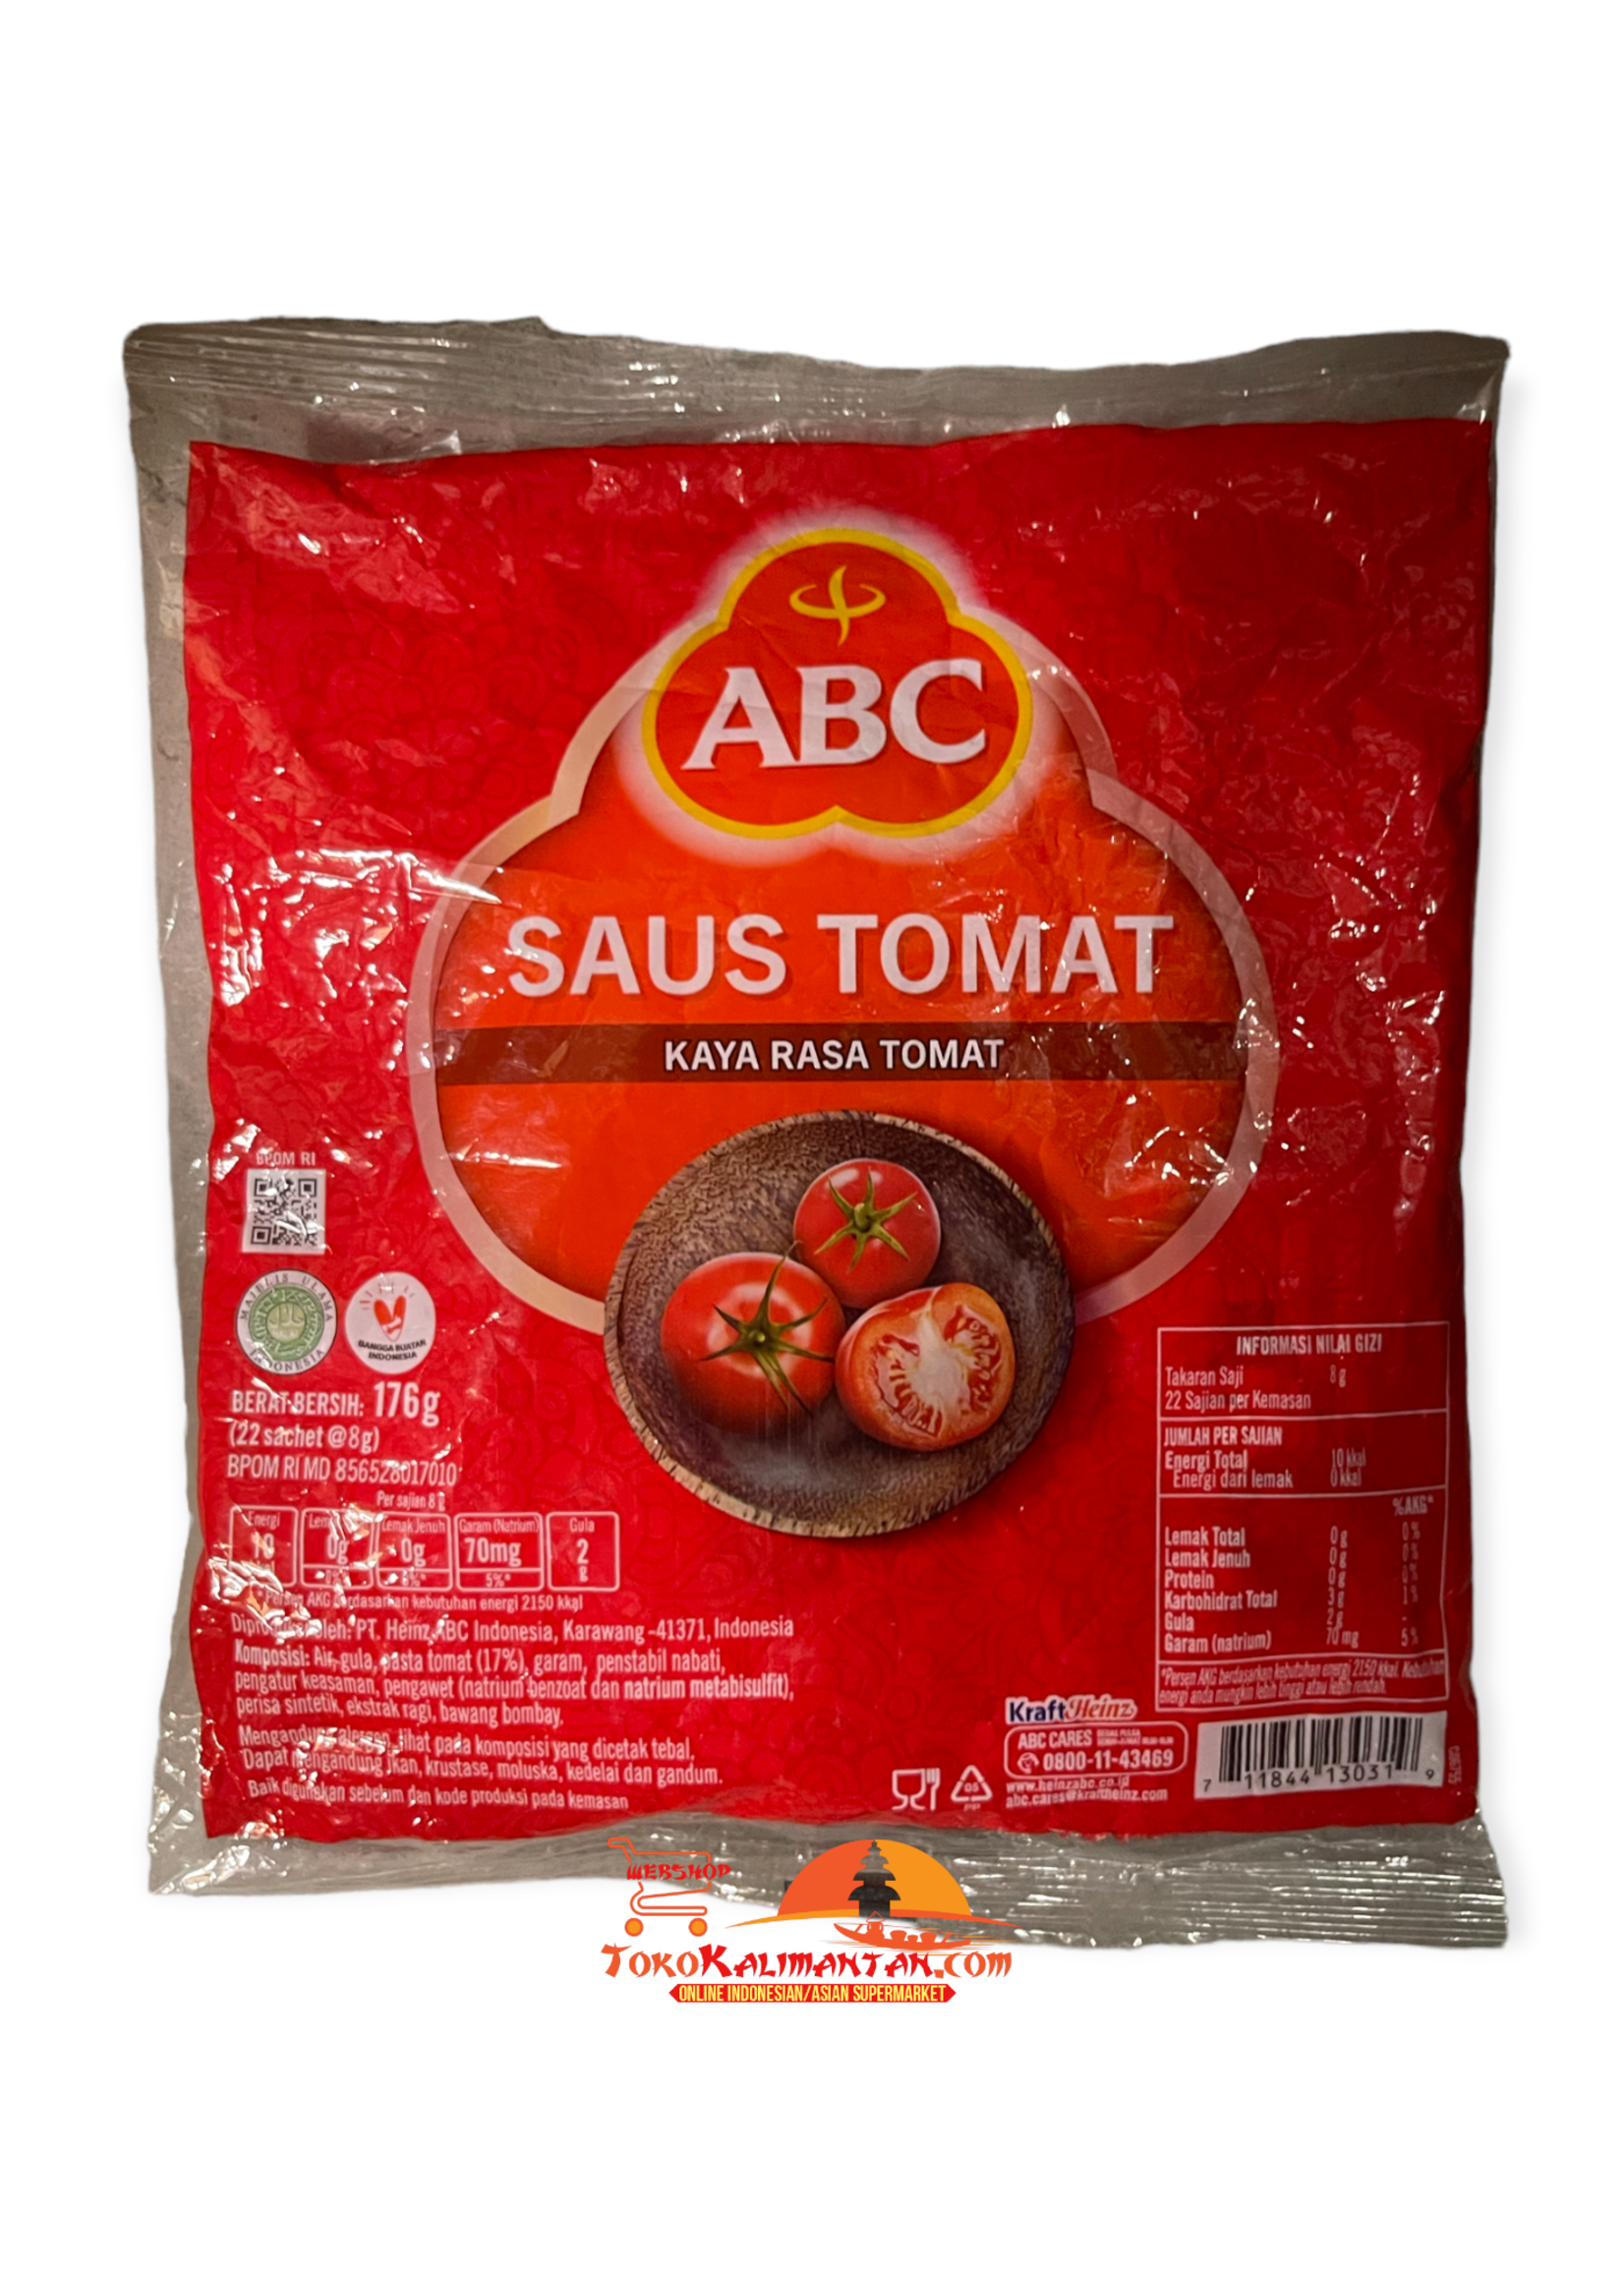 ABC Abc - saus tomat sachet